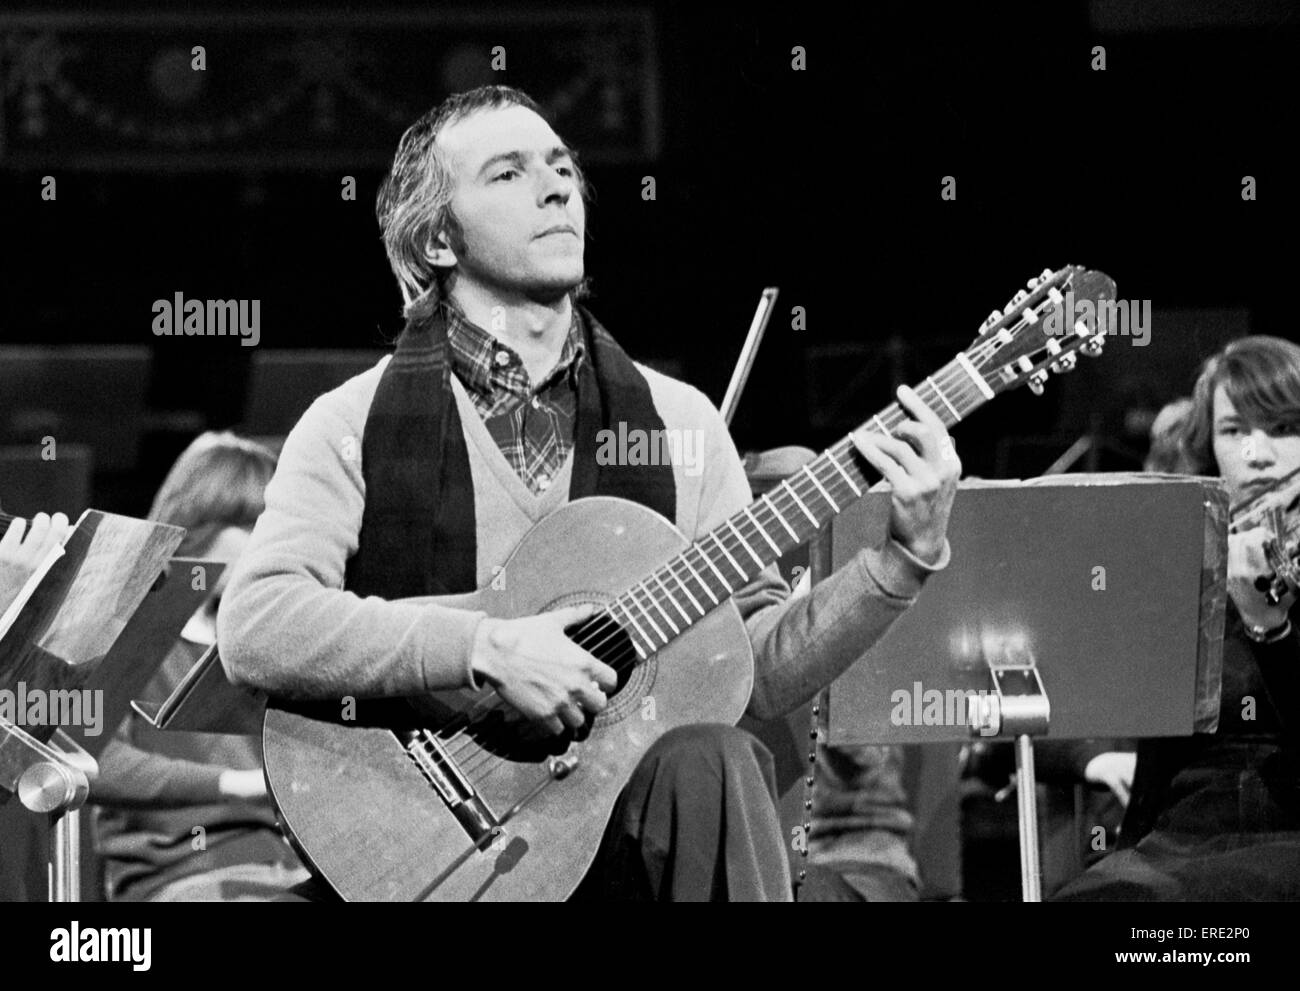 Australischer Gitarrist John Williams (geb. 1941) Proben in der Royal Albert Hall, London 1981 Stockfoto